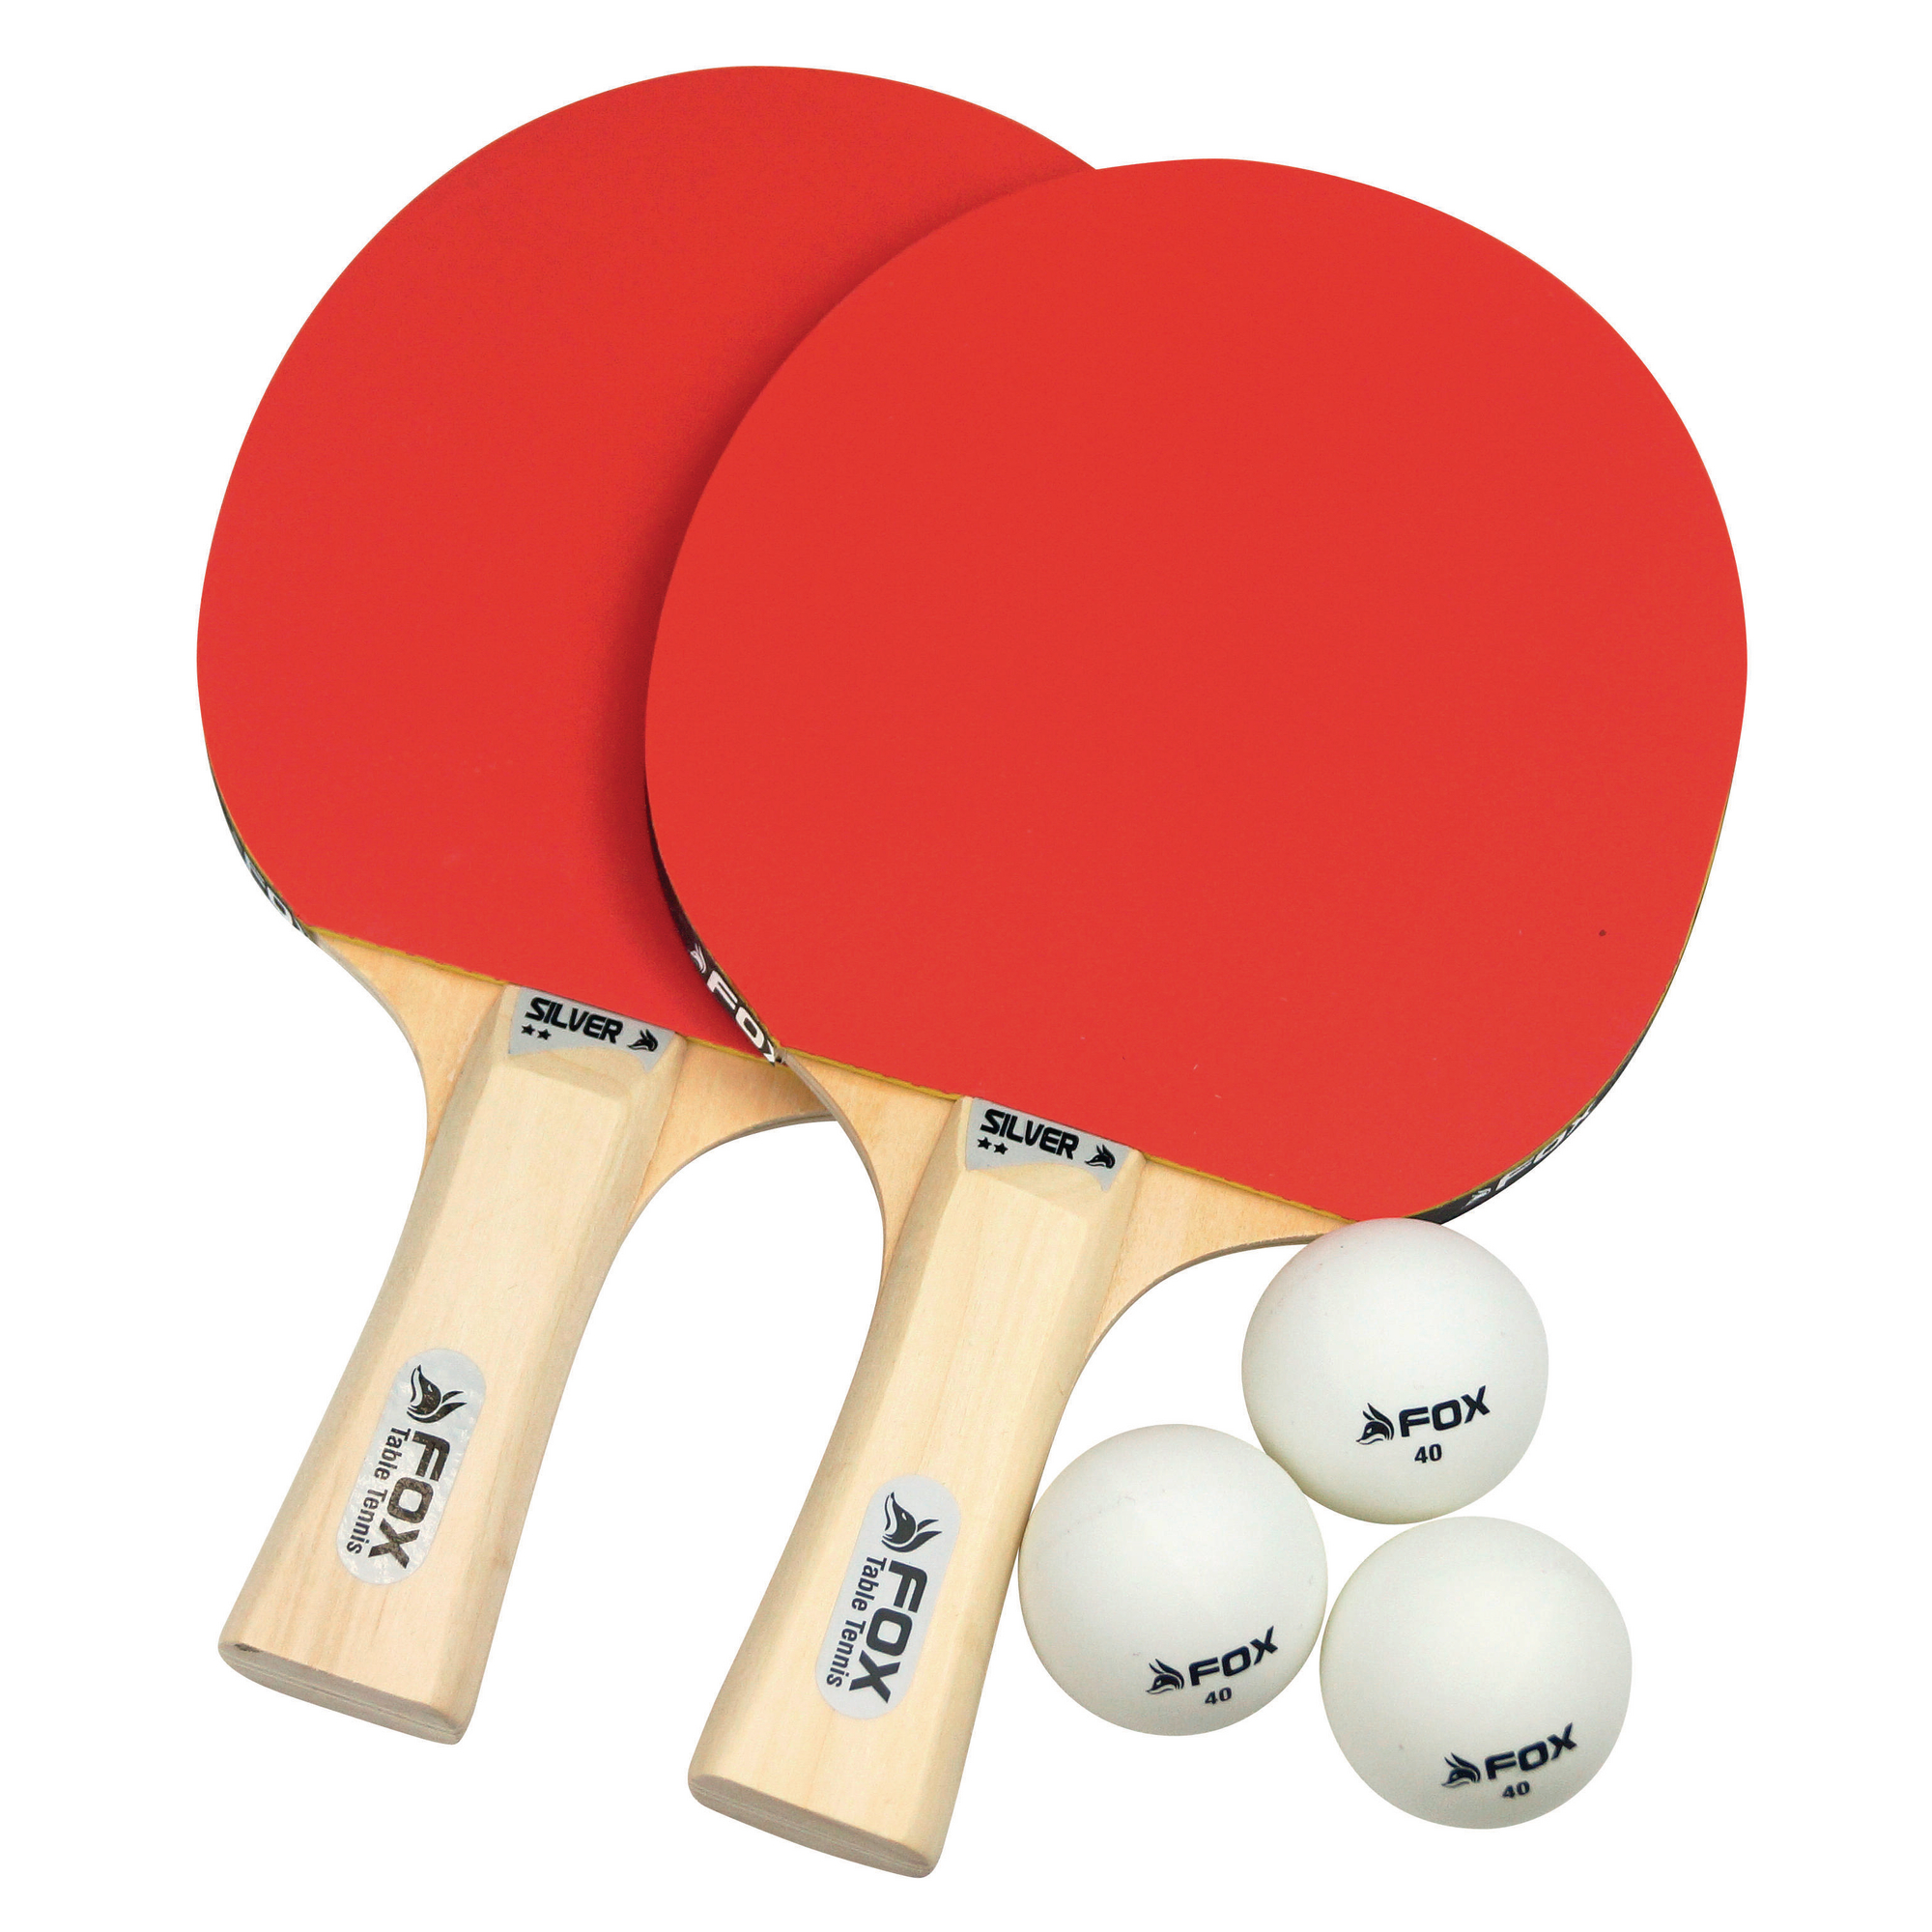 Fox Table Tennis Balls TT Darwin 3 Star Pack of 6 